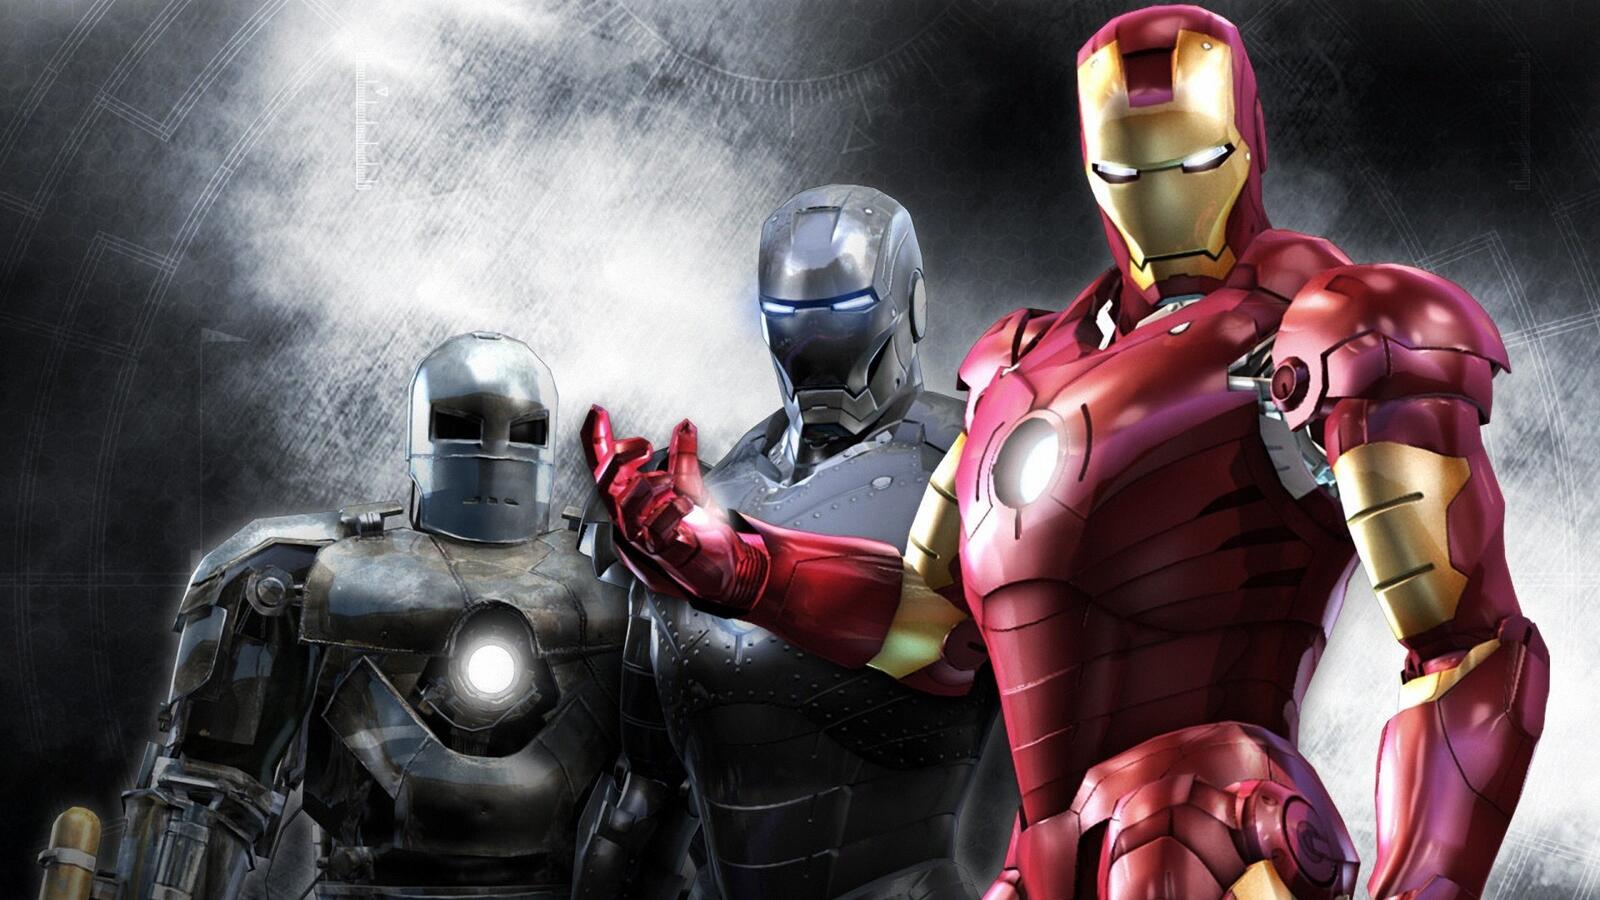 Wallpapers Iron Man superheroes movies on the desktop